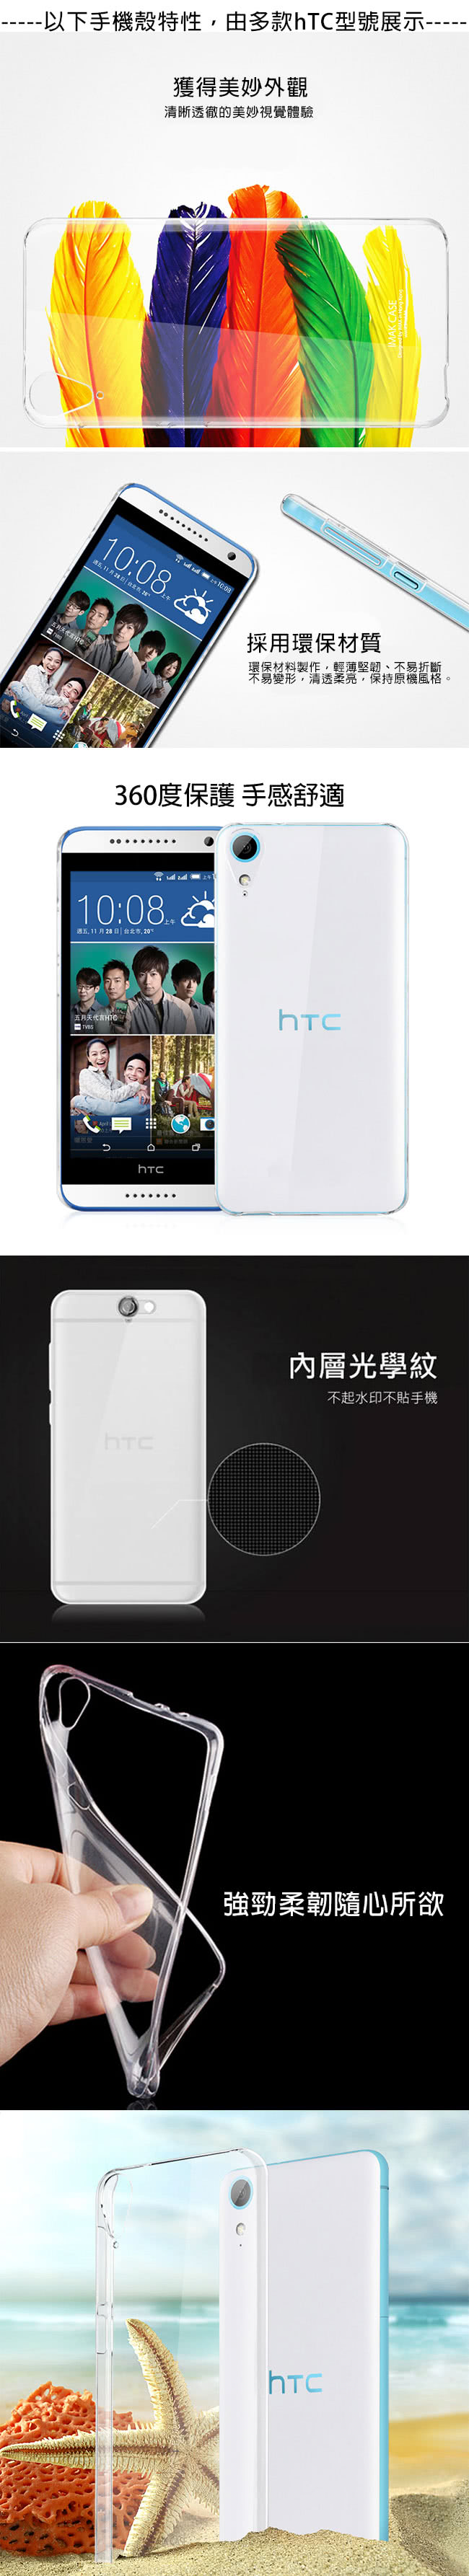 HTC-TPU_L.jpg?t=1523004841447